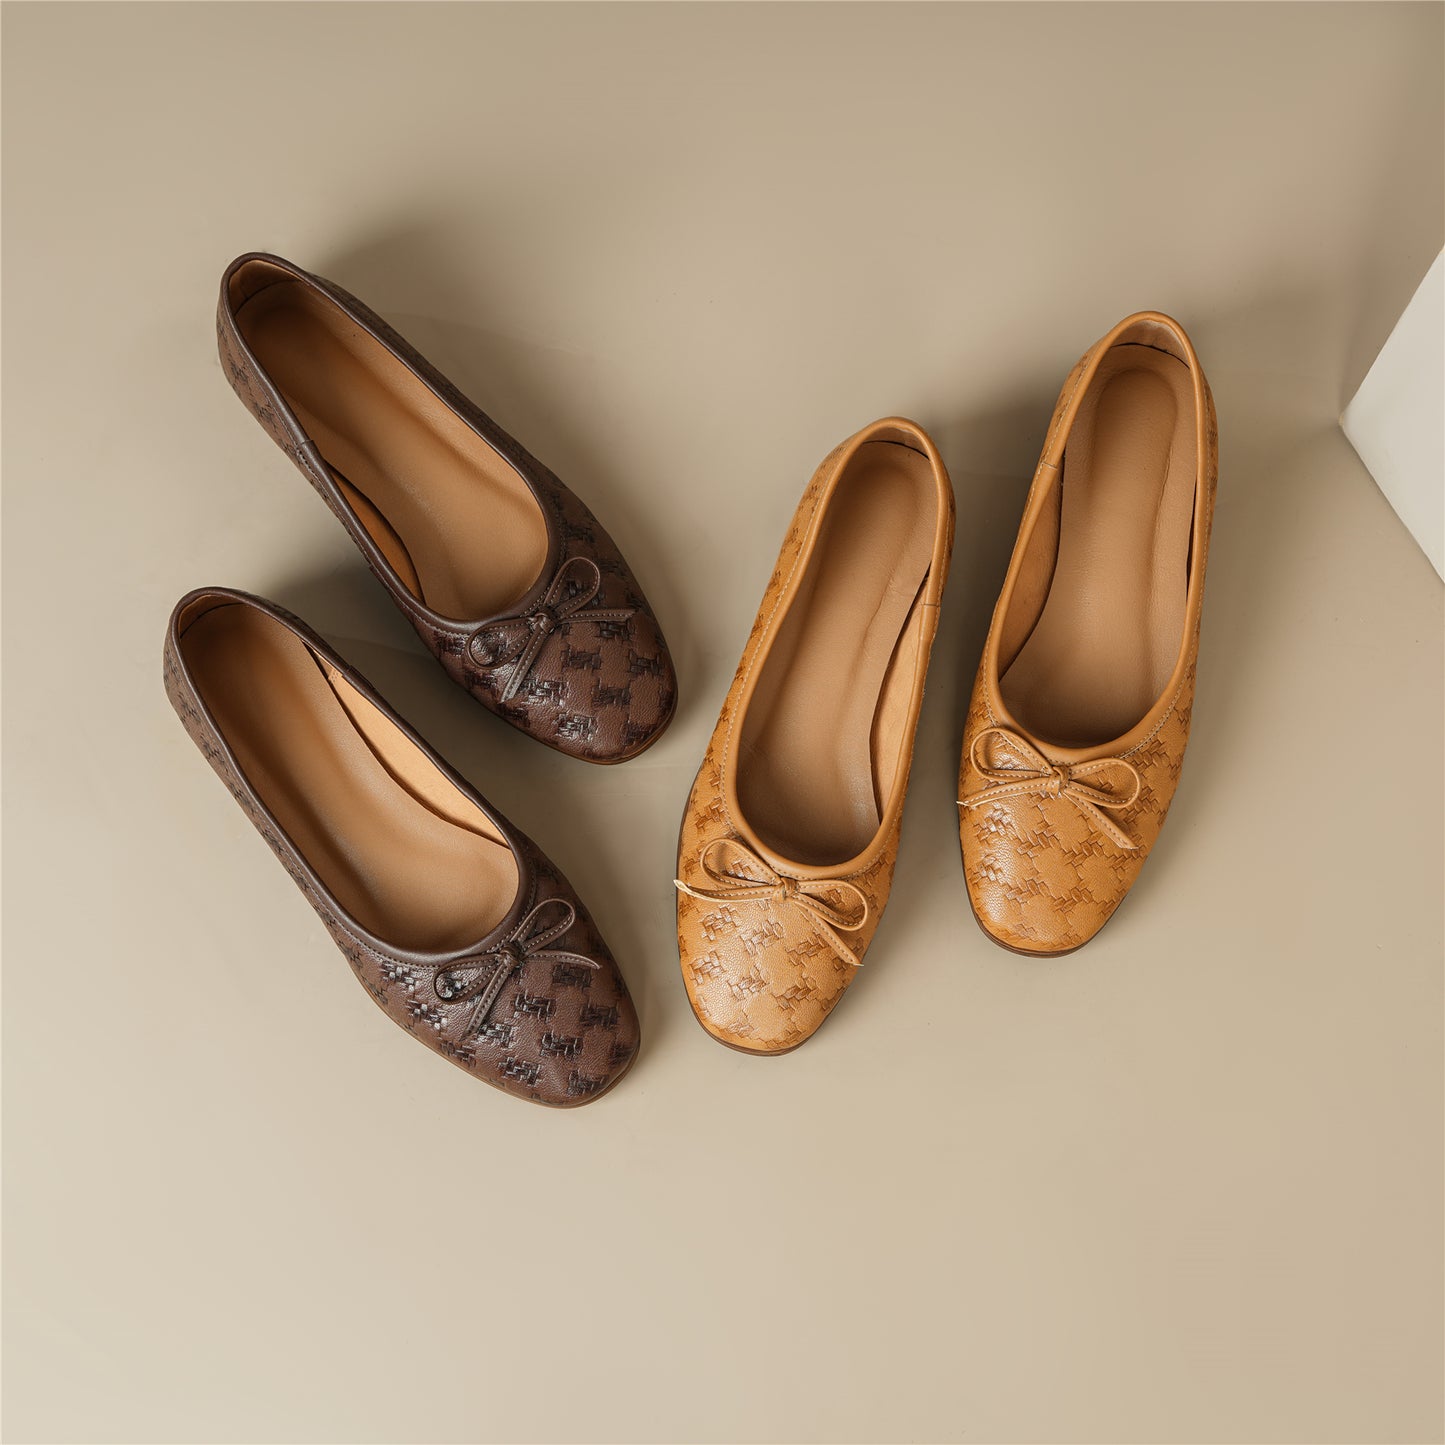 TinaCus Handmade Women's Genuine Leather Round Toe Slip On Flats with Bowtie